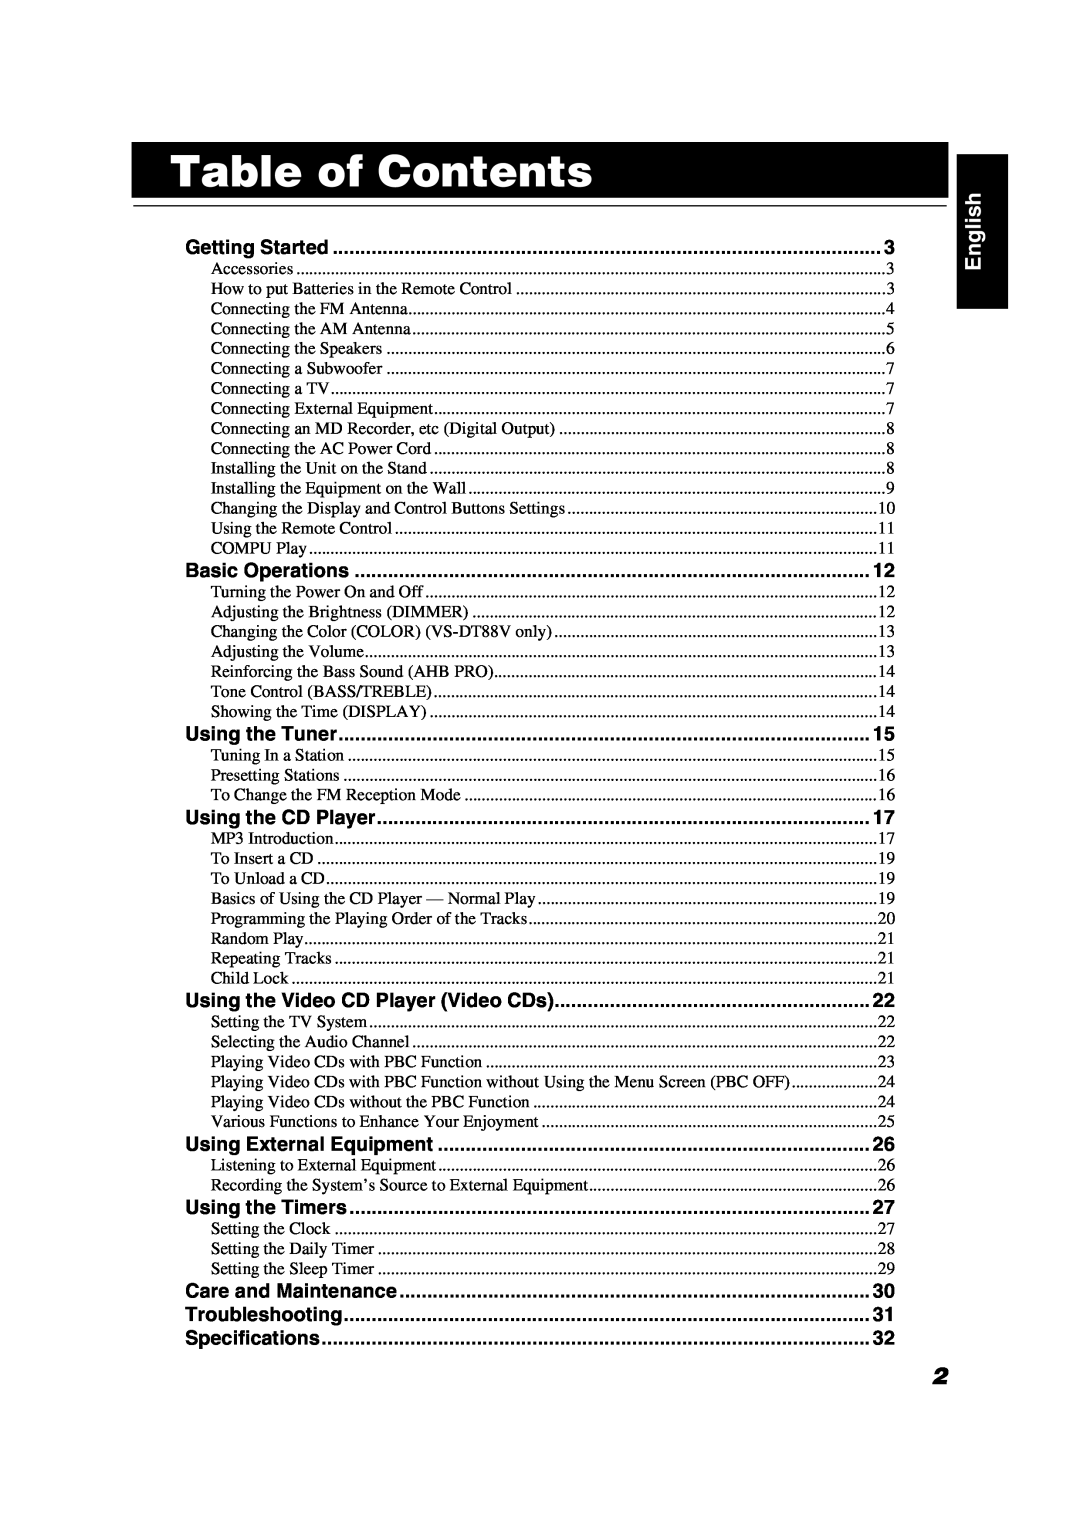 JVC VS-DT88V, VS-DT68V manual Table of Contents, English 